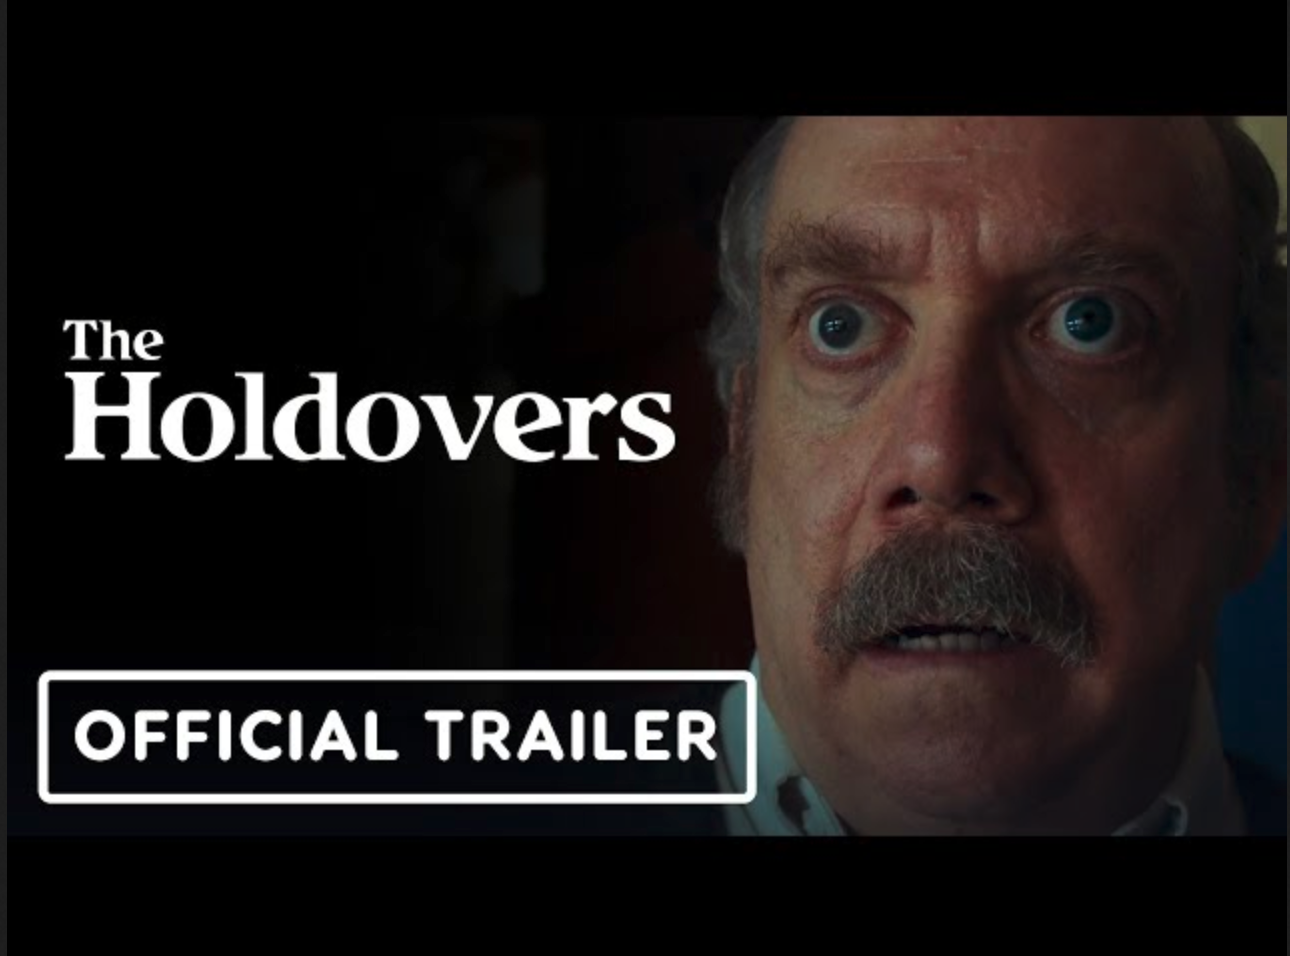 The Holdovers Official Trailer Paul Giamatti, Da’Vine Joy Randolph